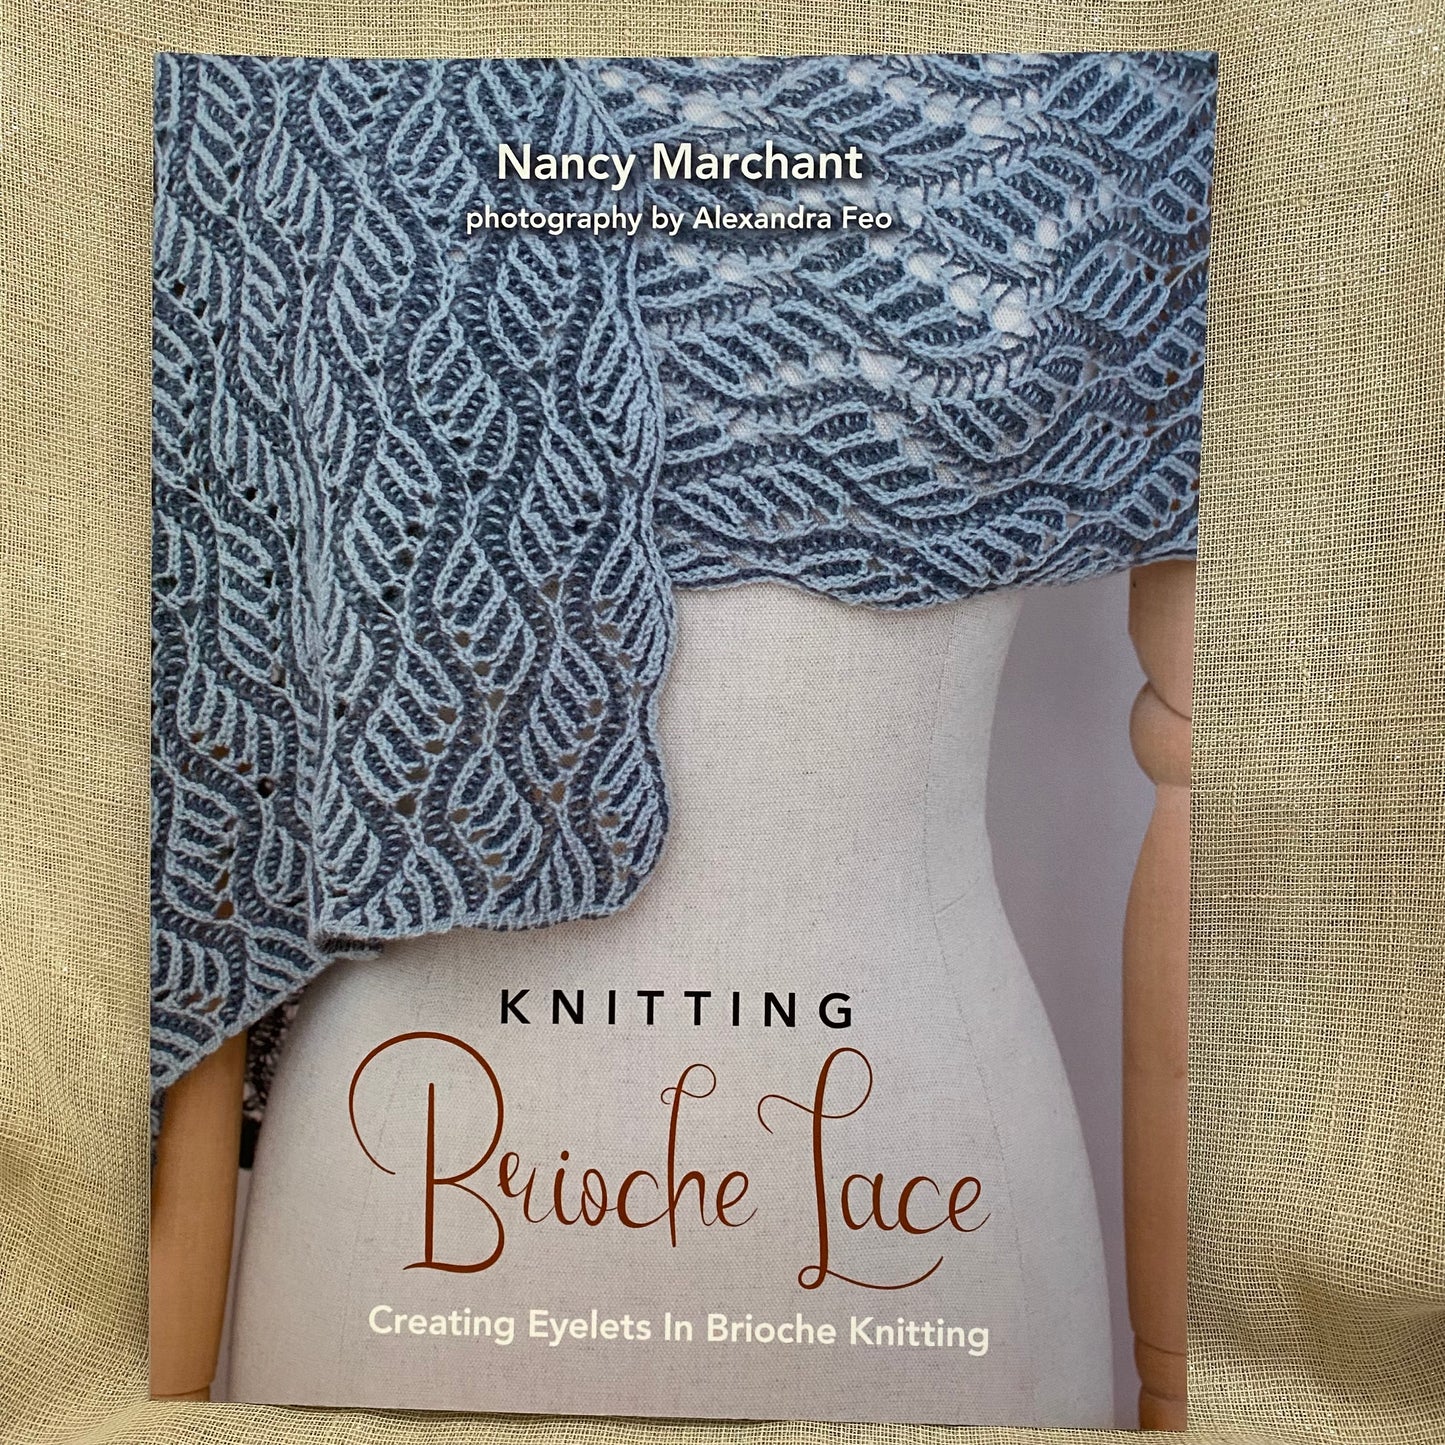 Knitting Brioche Lace by Nancy Marchant